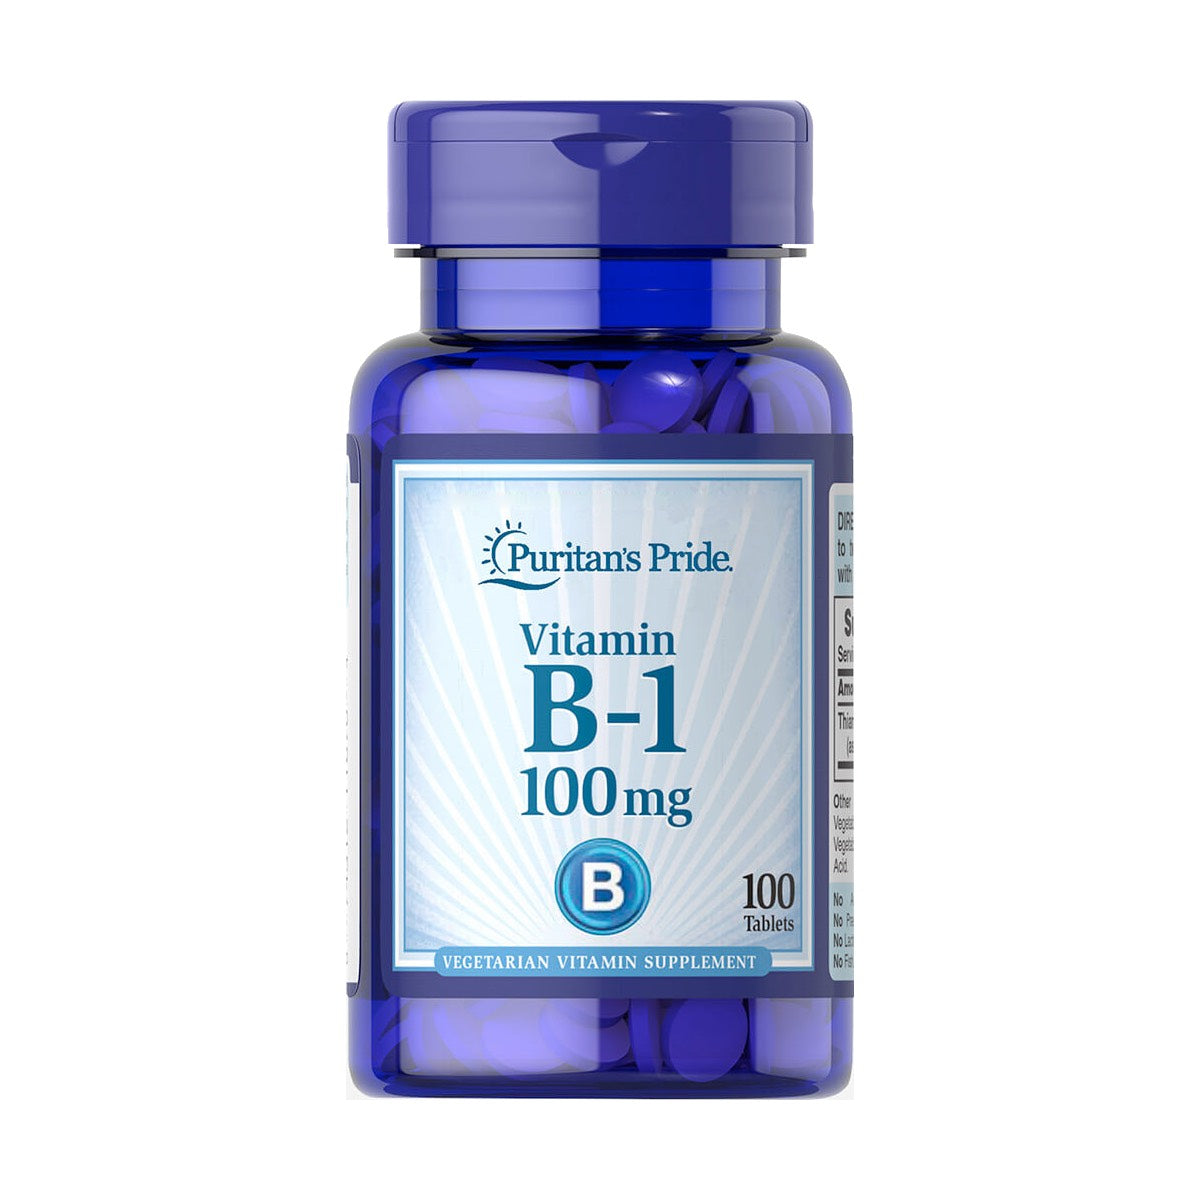 Puritan's Pride, Vitamin B-1 100 mg